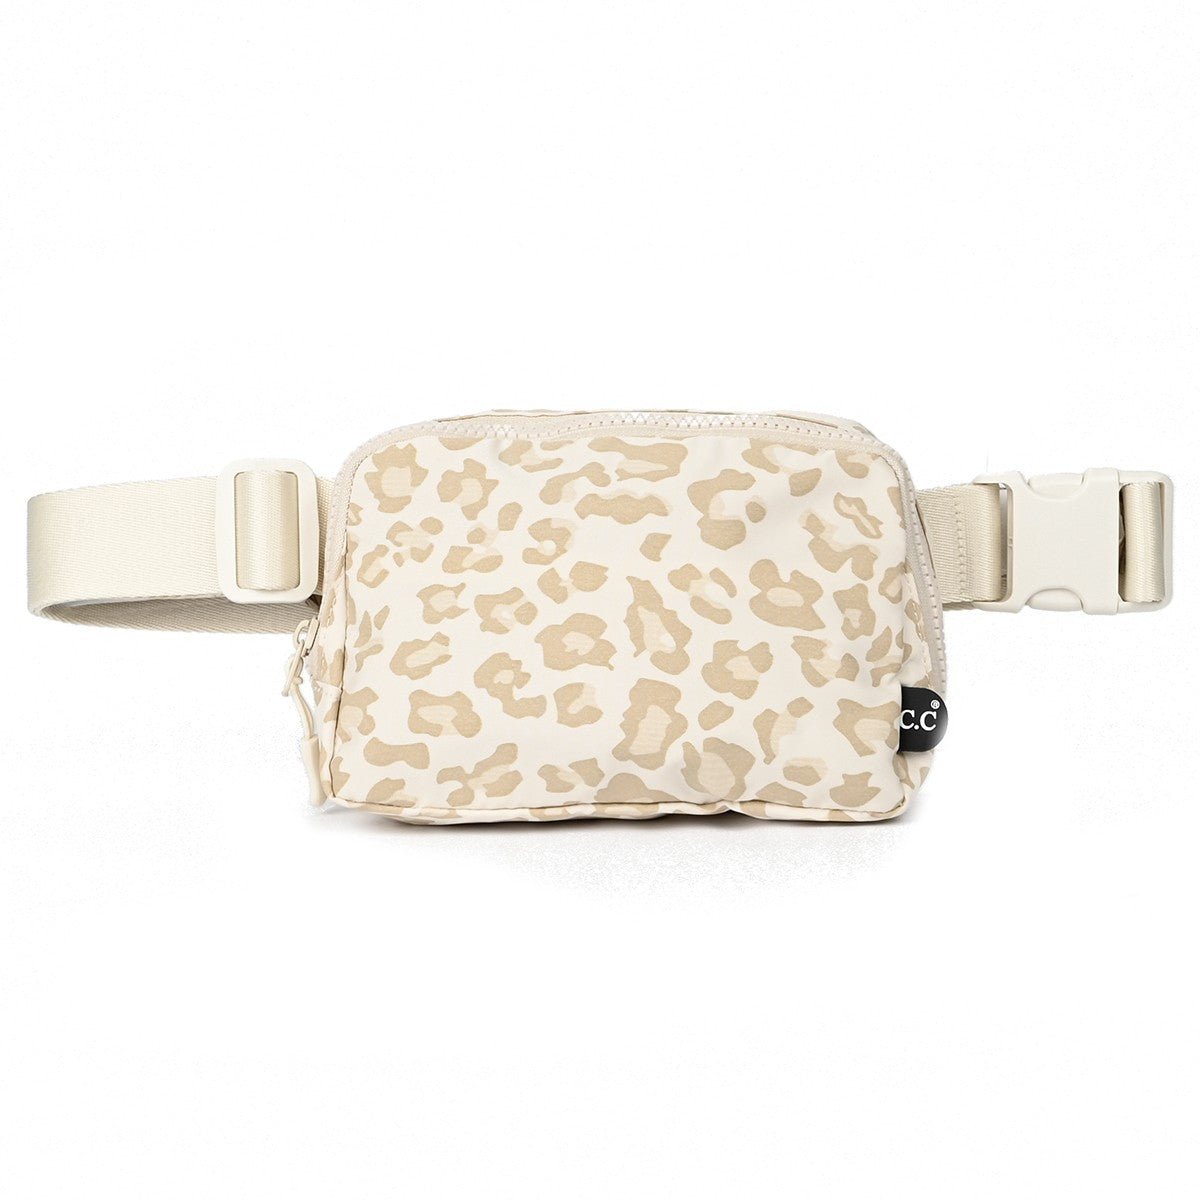 CC Leopard Pattern Belt Bag Fanny Pack Tote Bags Bags Fashion Bravada